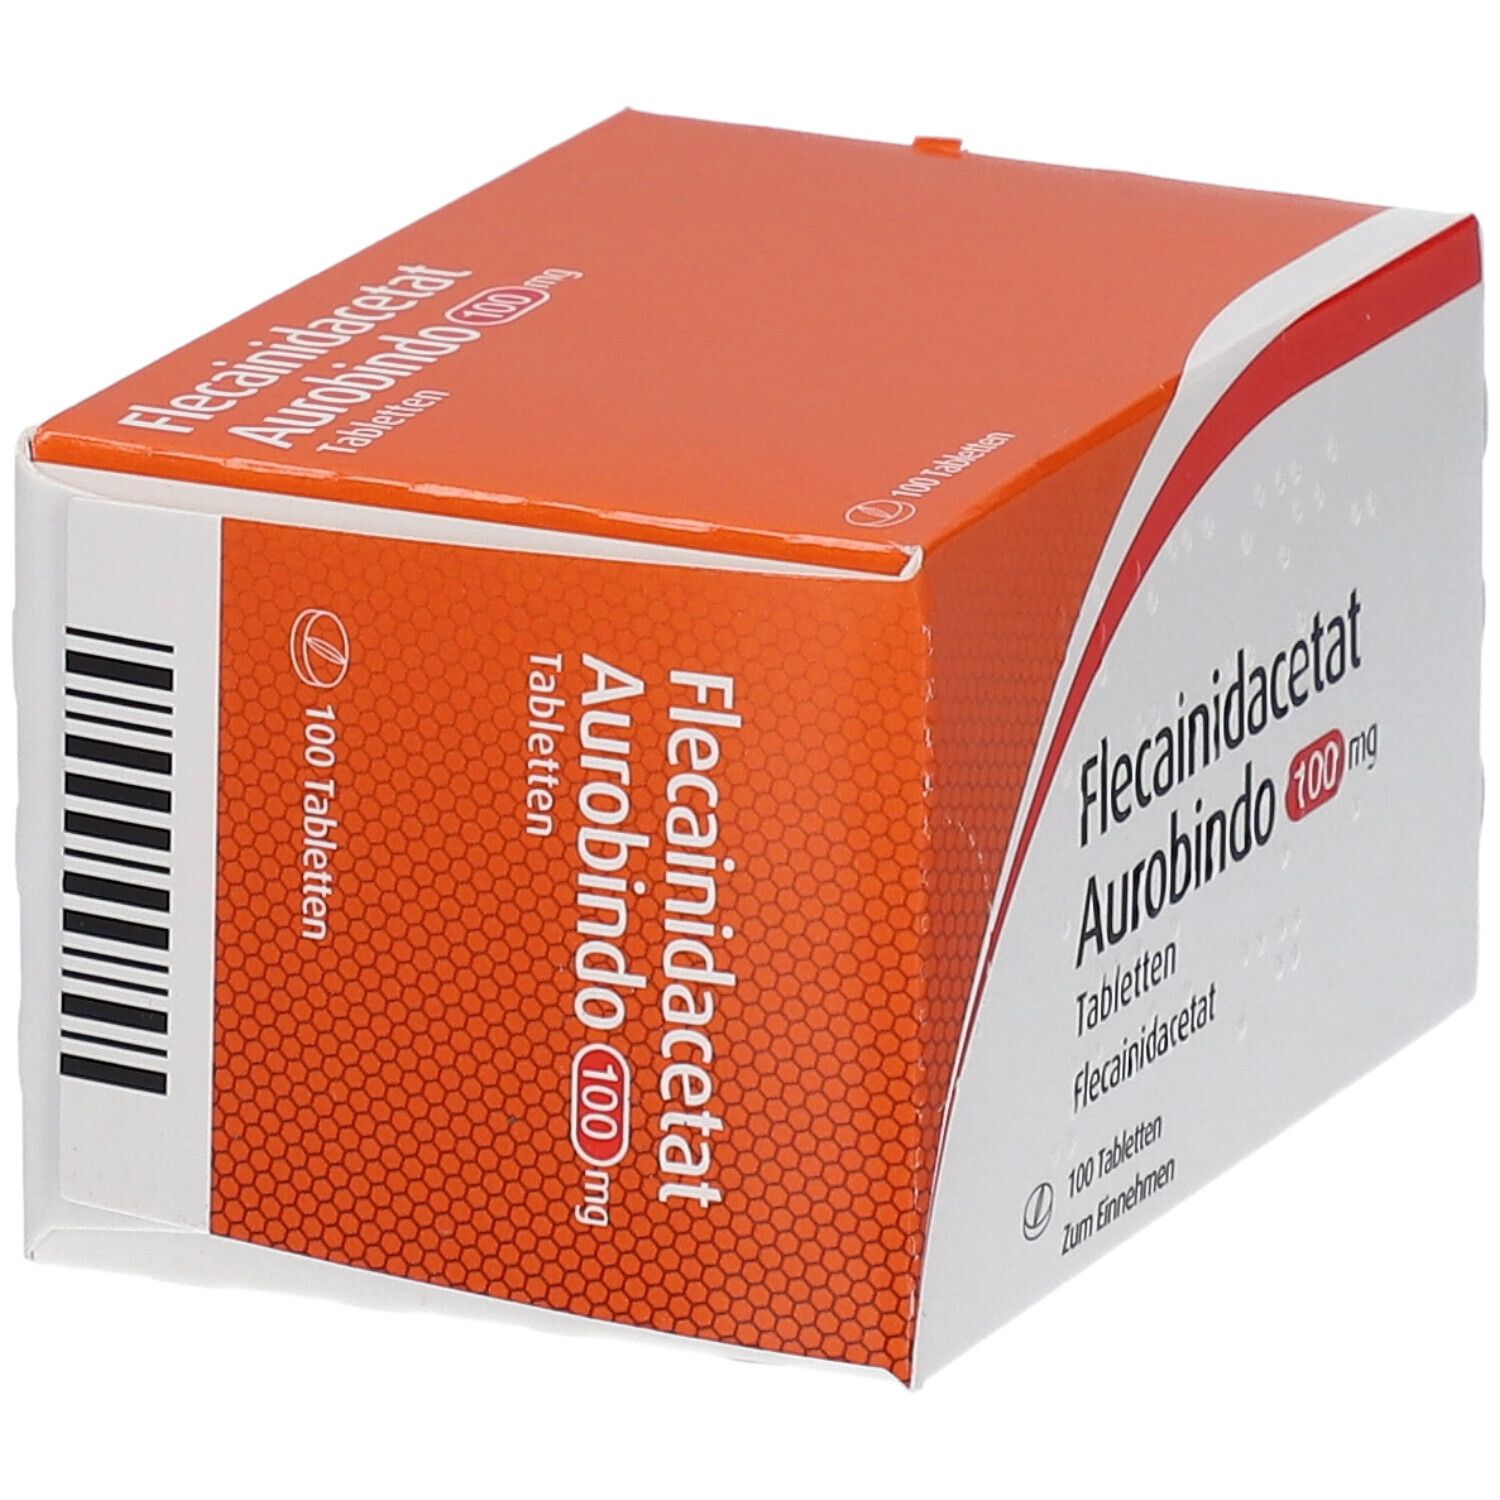 Flecainidacetat Aurobindo 100 mg